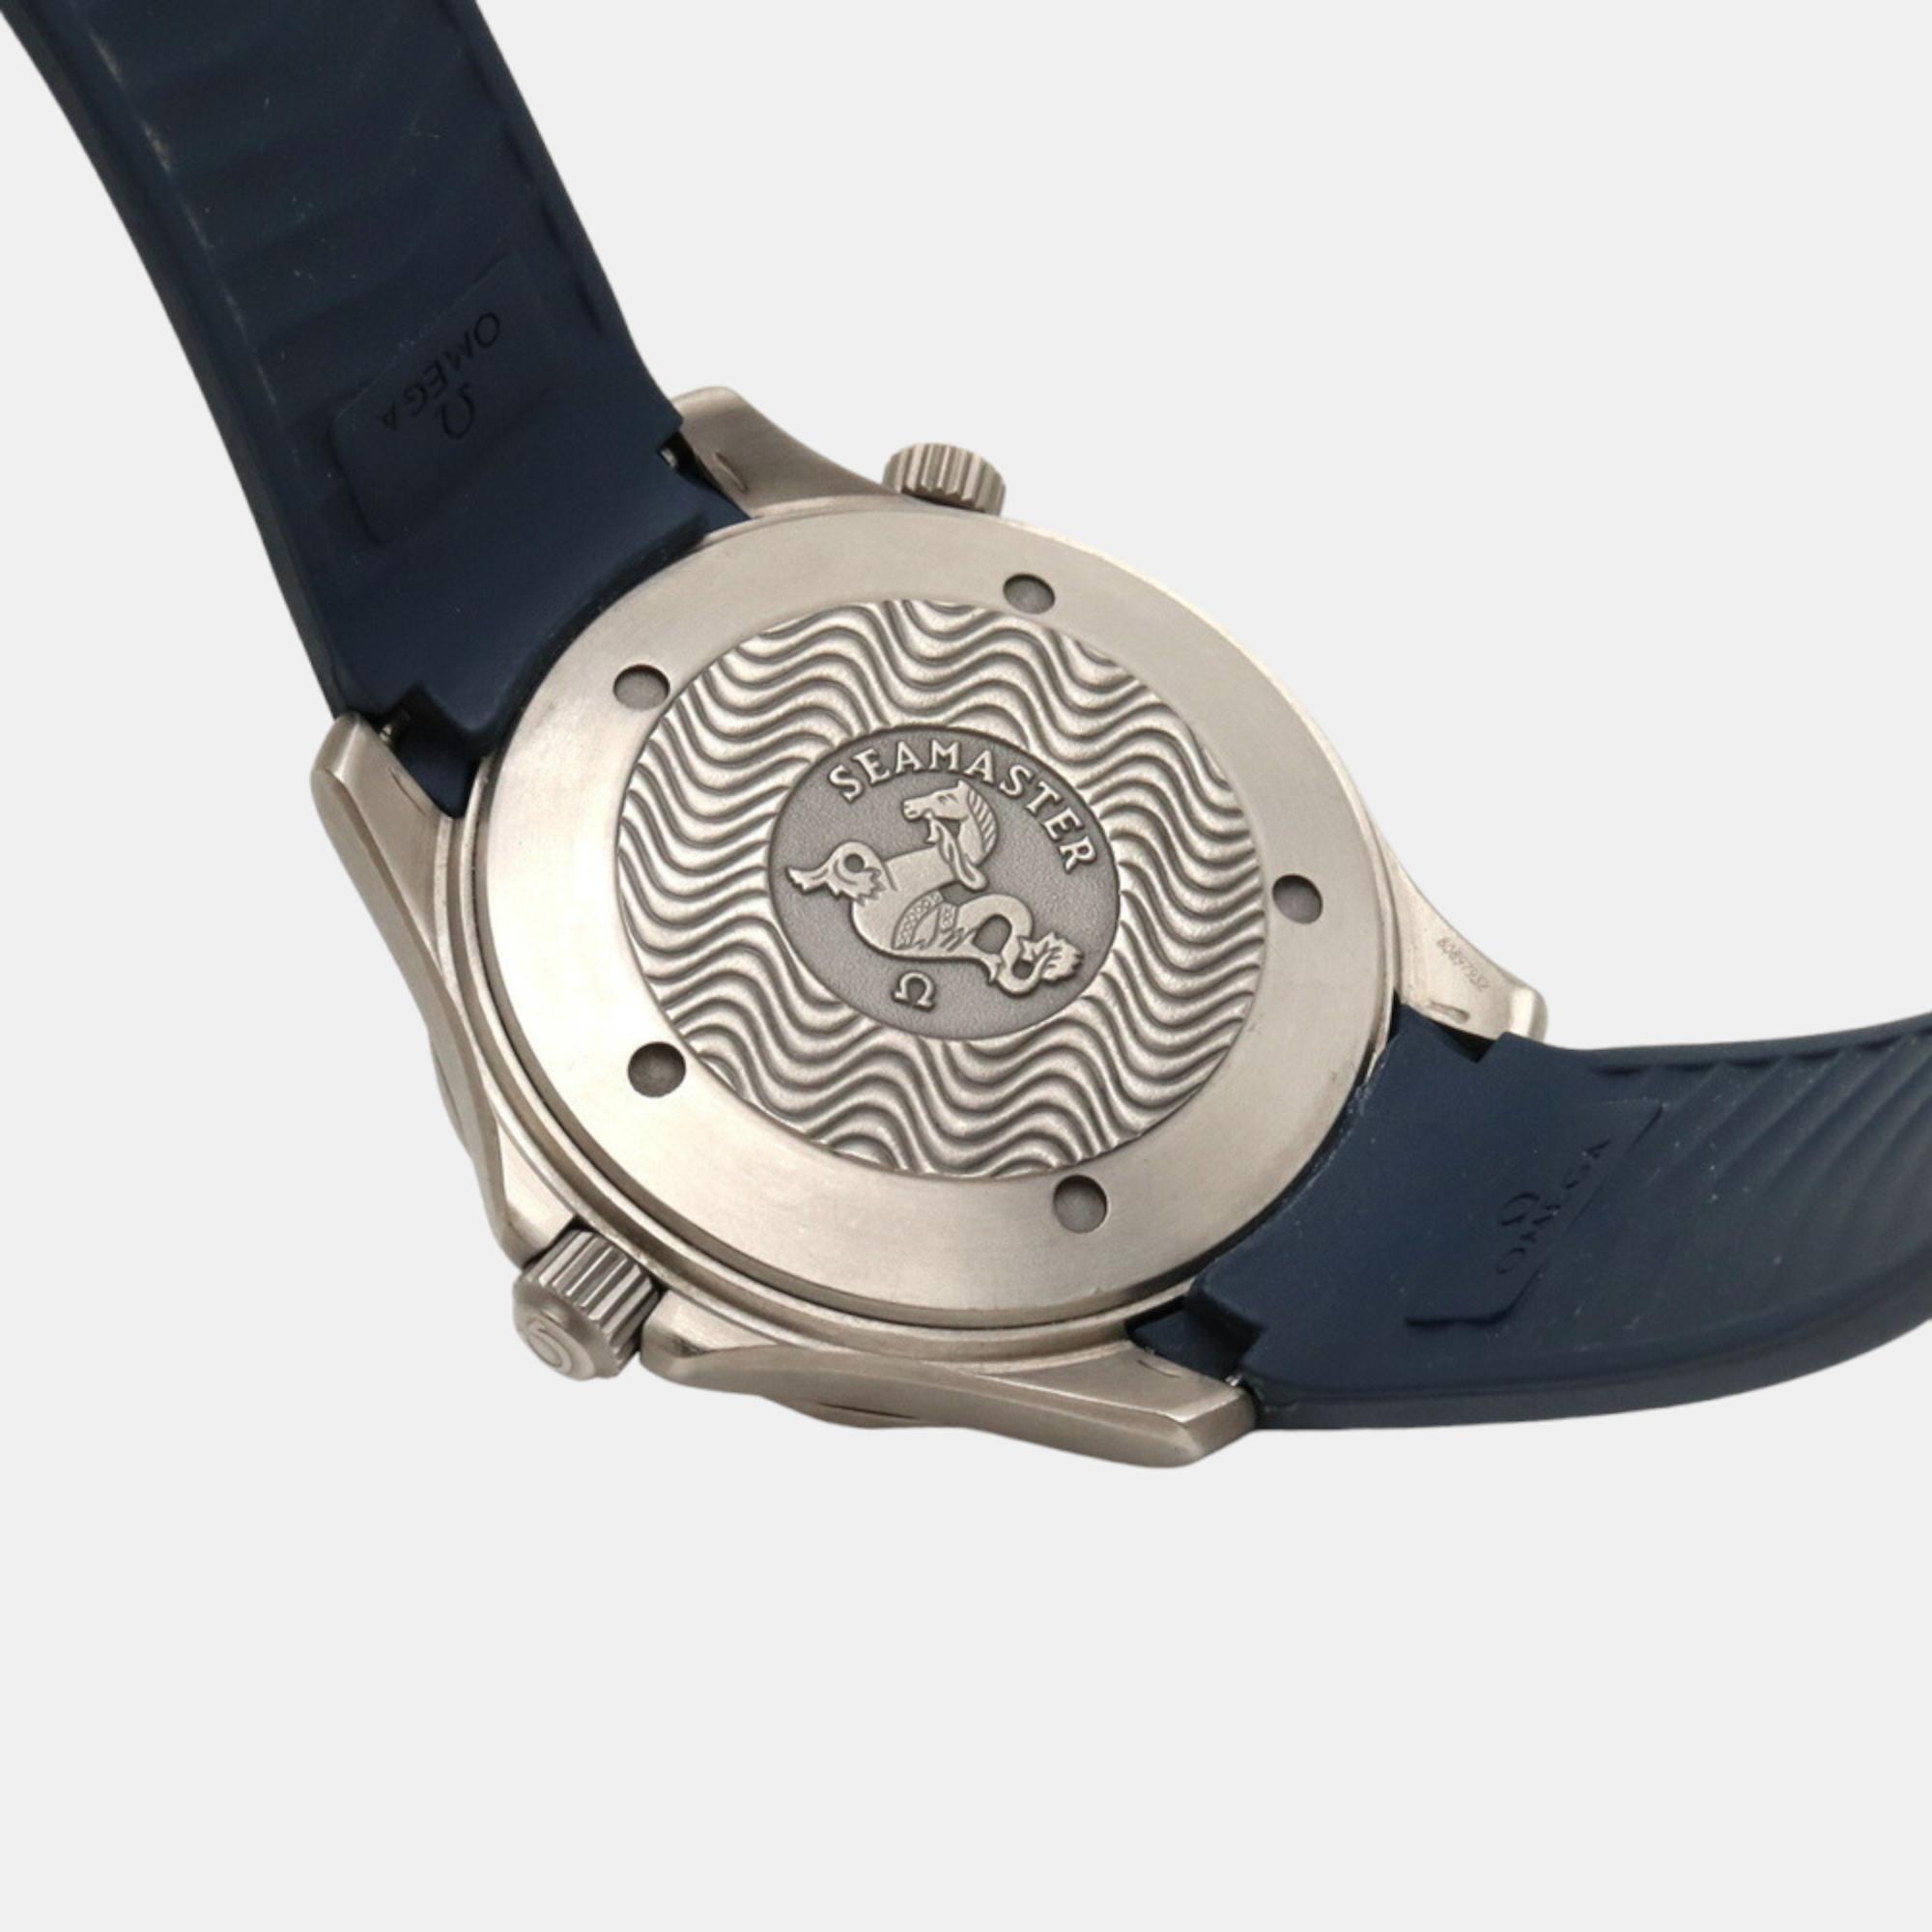 Omega Blue Titanium Seamaster 2231.80 Automatic Men's Wristwatch 41 Mm